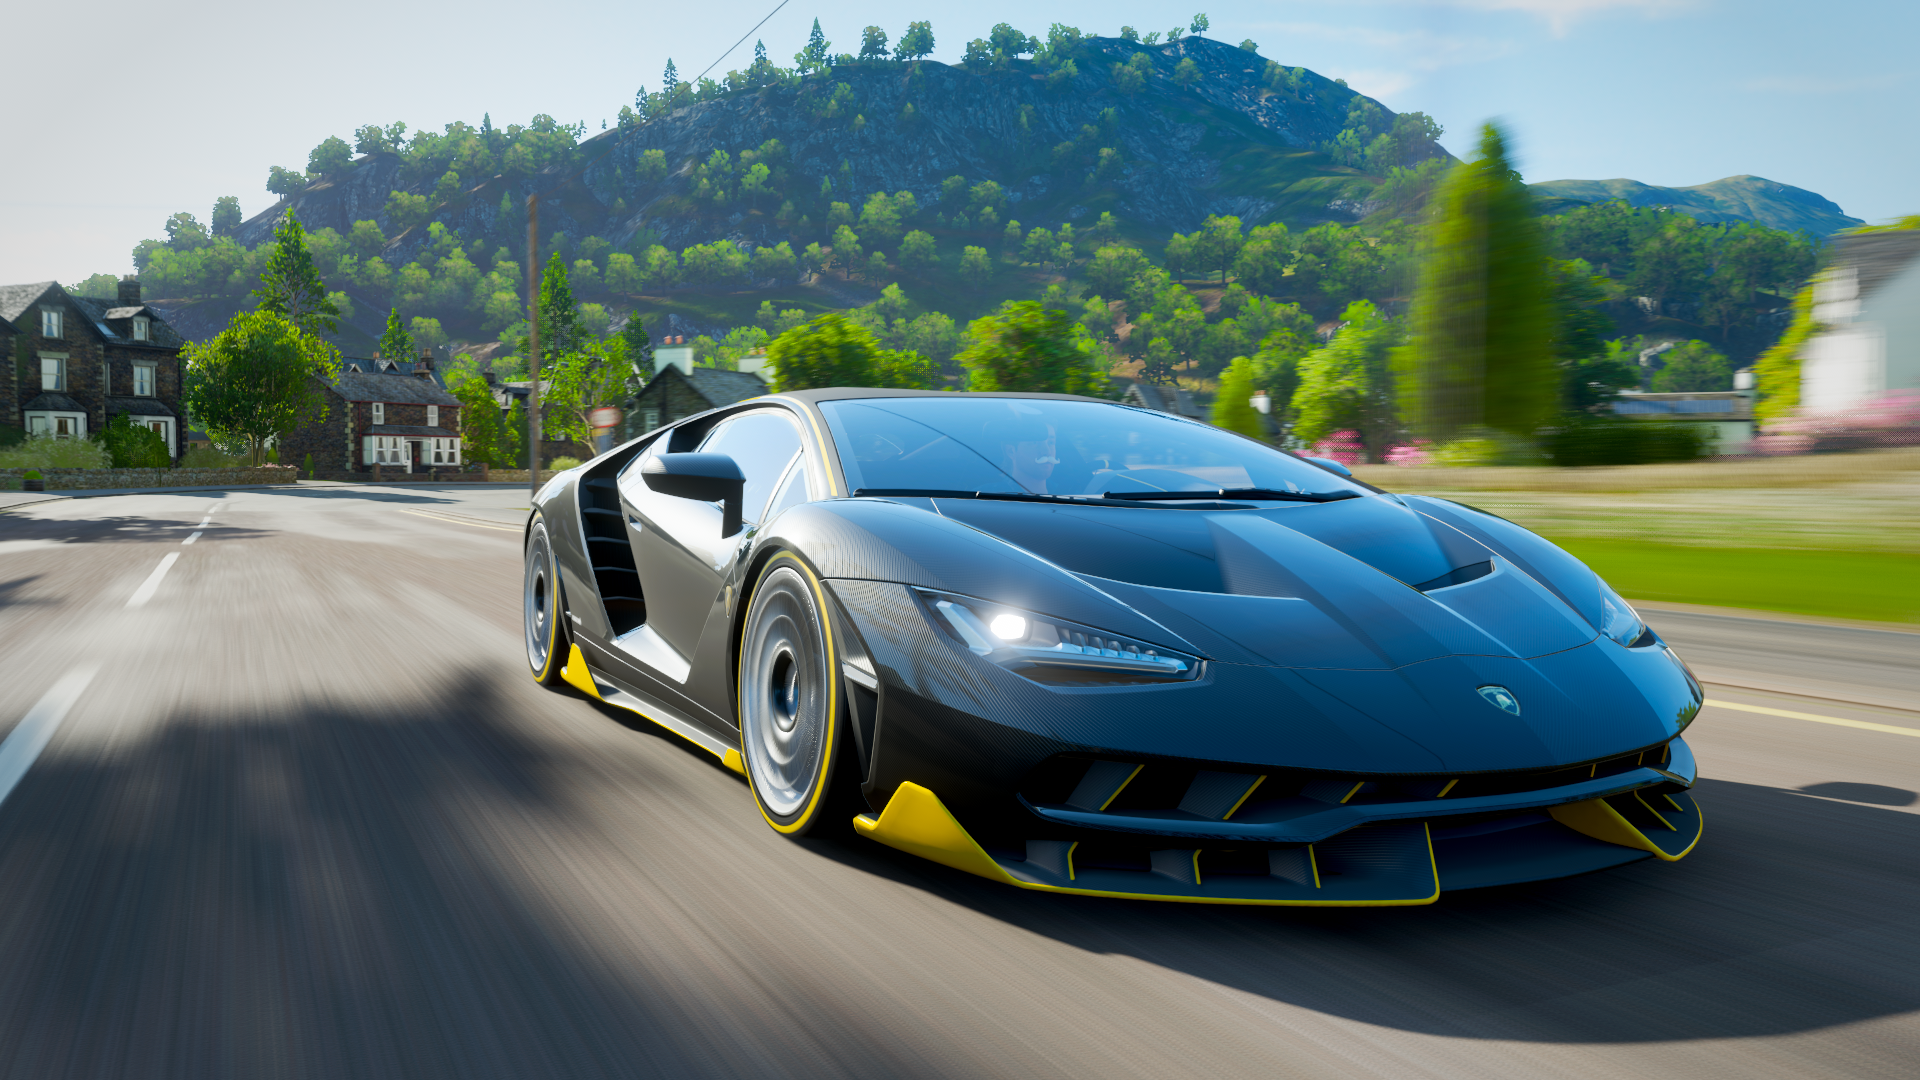 Xbox One Forza Horizon 4 Video Games Screen Shot Racing Car Black Cars Vehicle 1920x1080